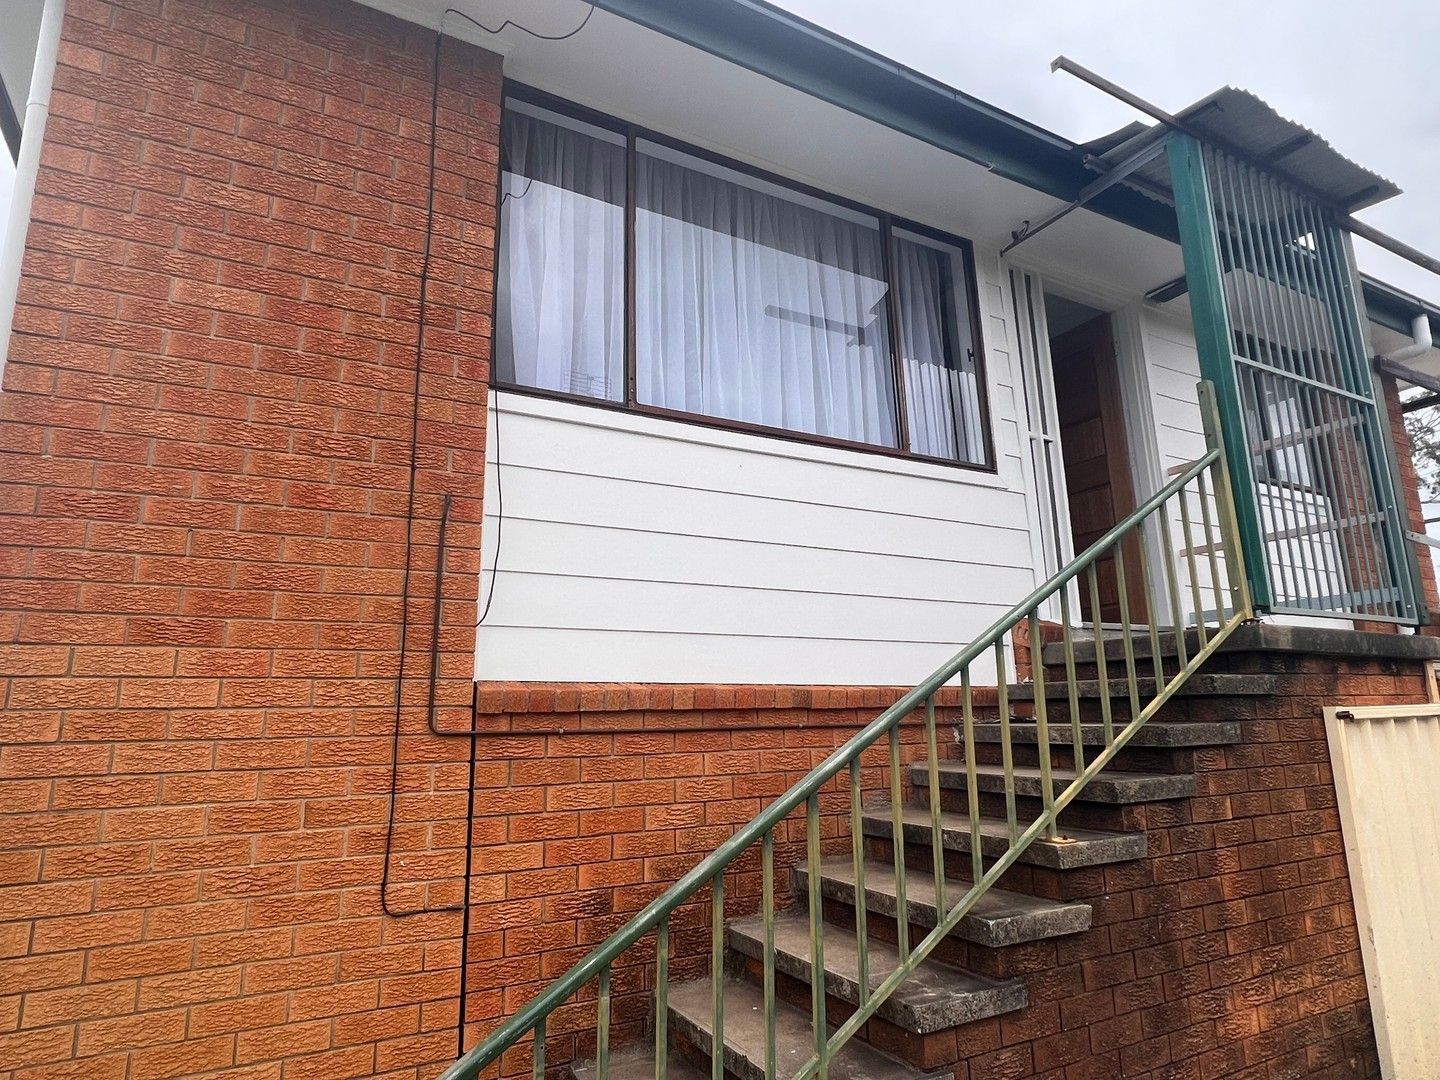 3 bedrooms House in 54 Adelaide Street RAYMOND TERRACE NSW, 2324